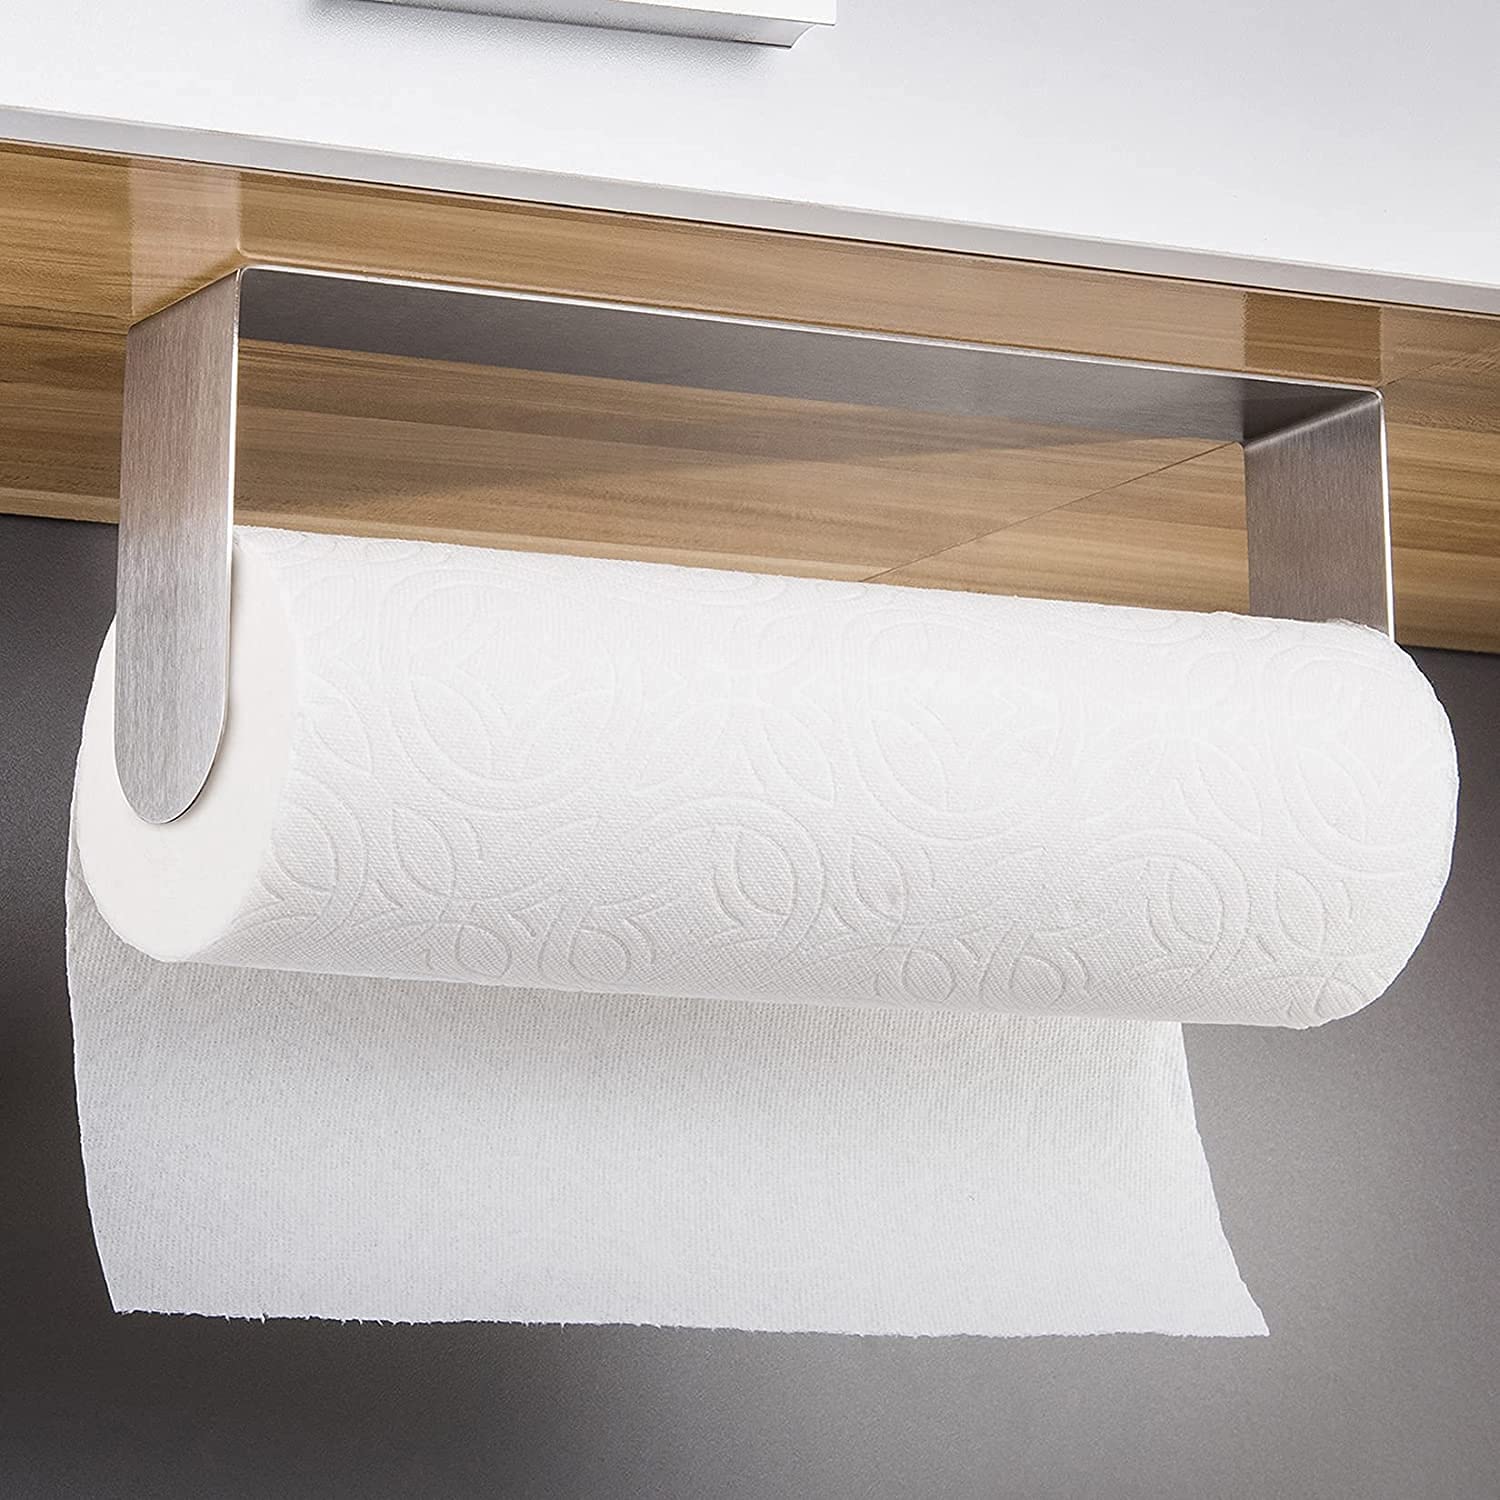 https://www.dontwasteyourmoney.com/wp-content/uploads/2023/02/yigii-self-adhesive-stainless-steel-hanging-paper-towel-holder-hanging-paper-towel-holder.jpg